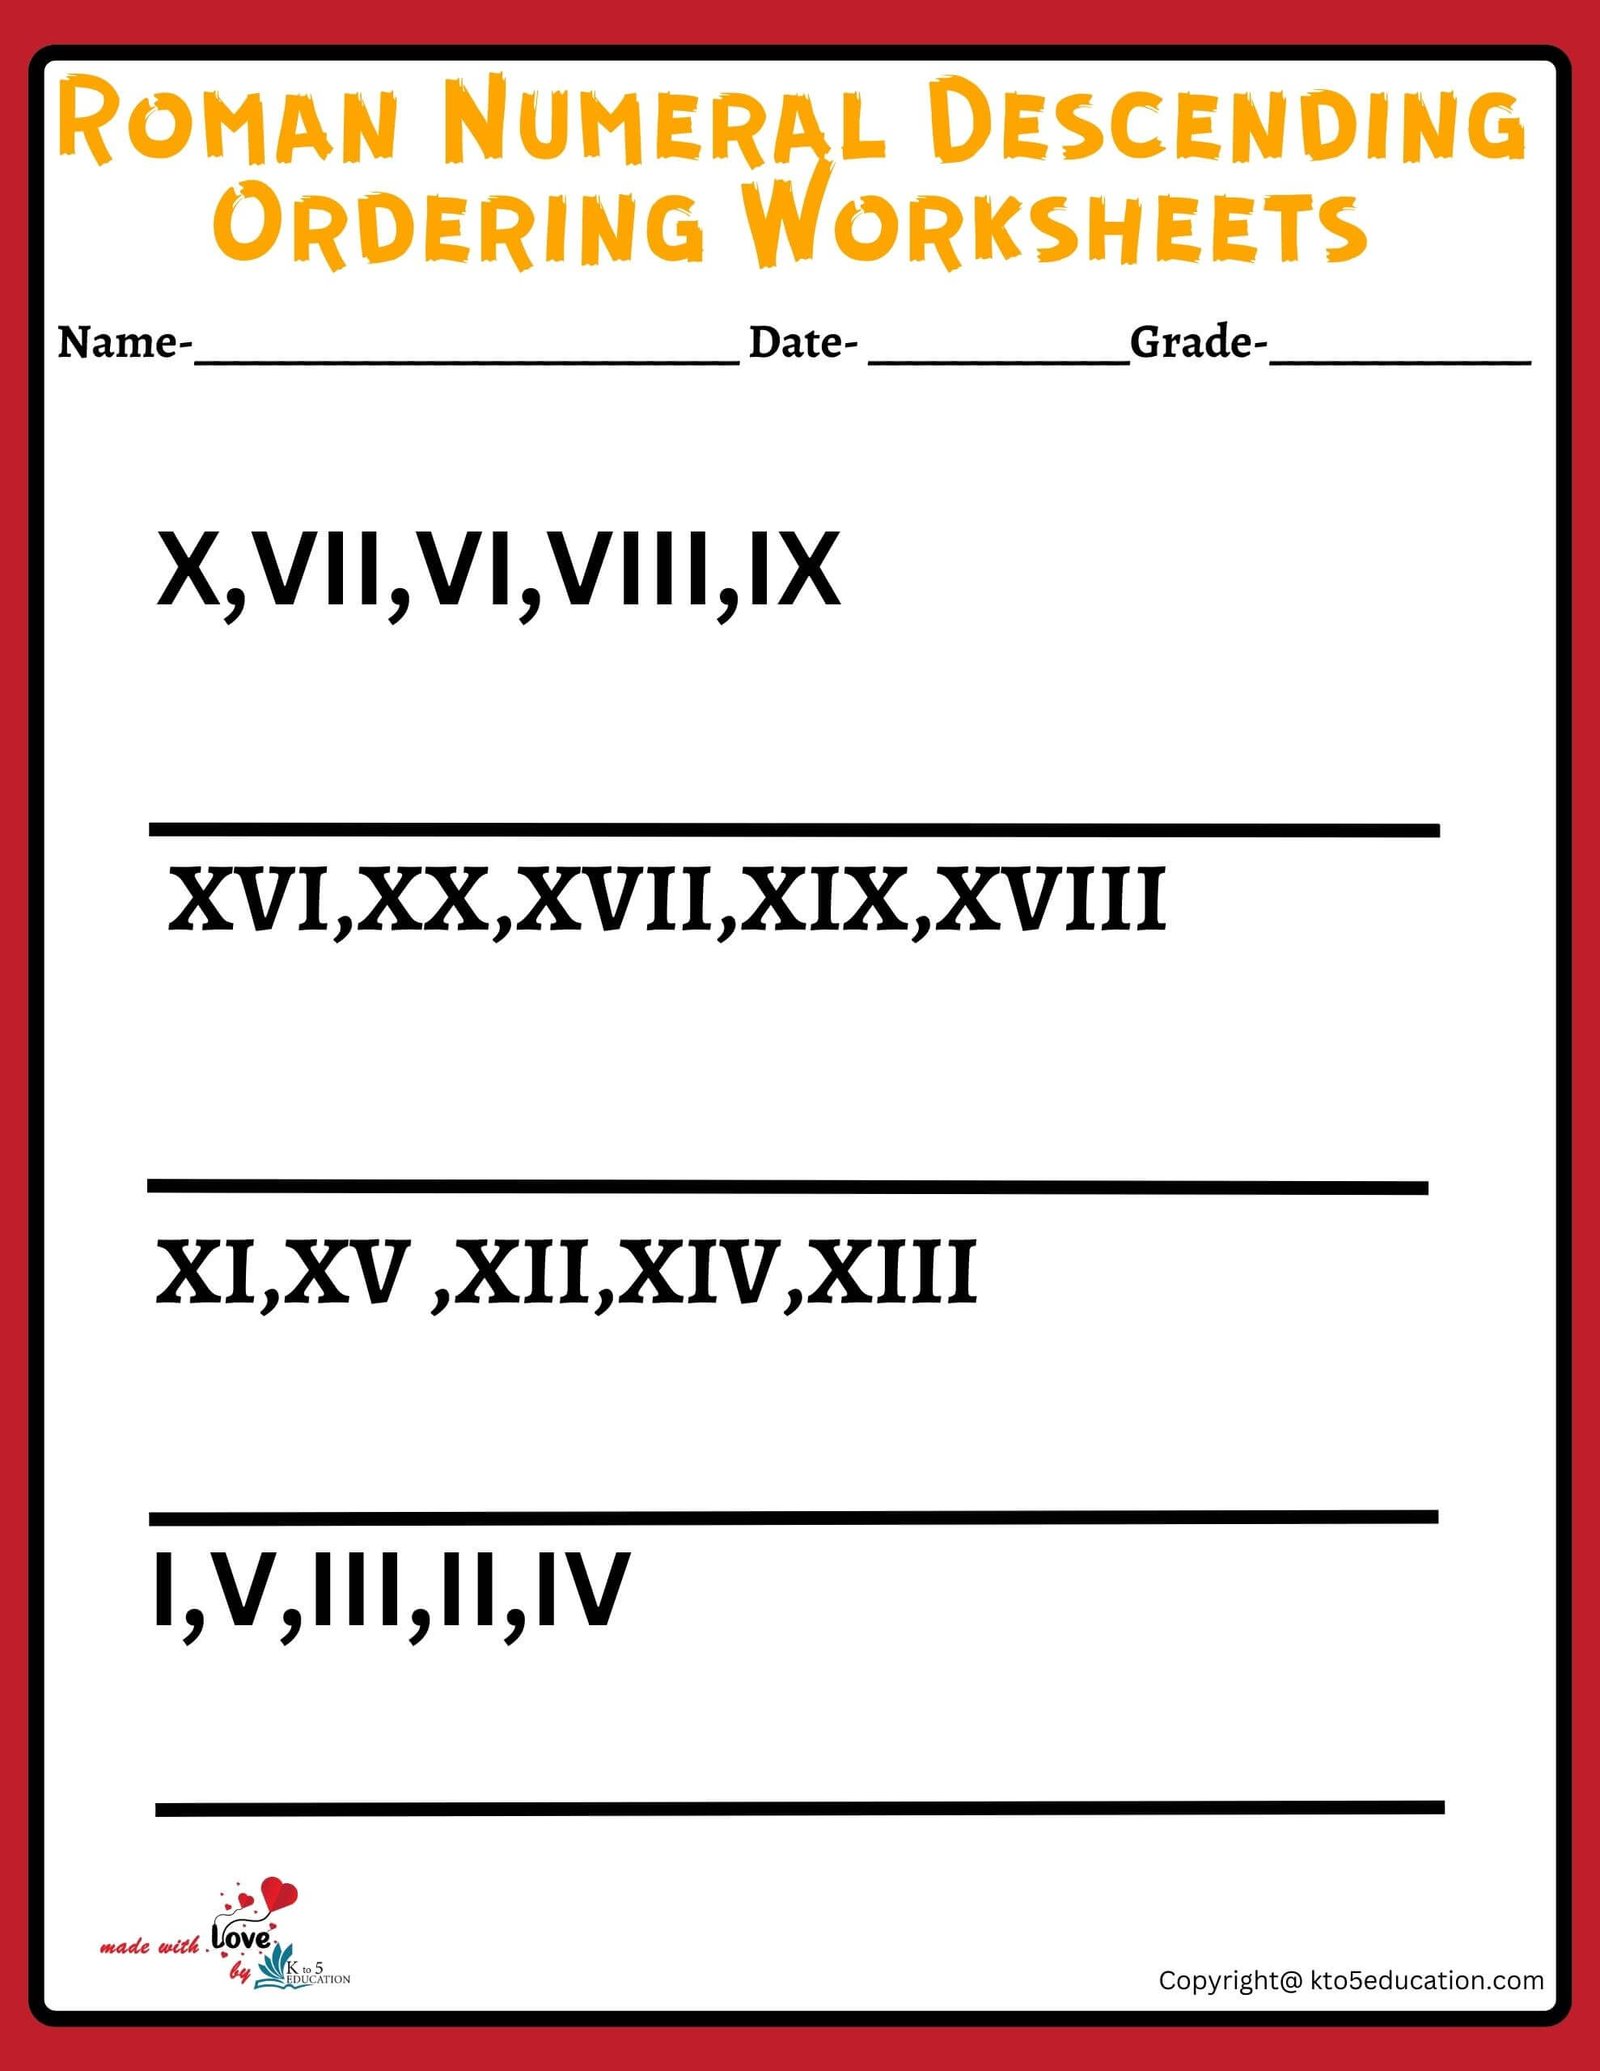 Roman Numeral Descending Ordering Worksheets Grade 6 (2)